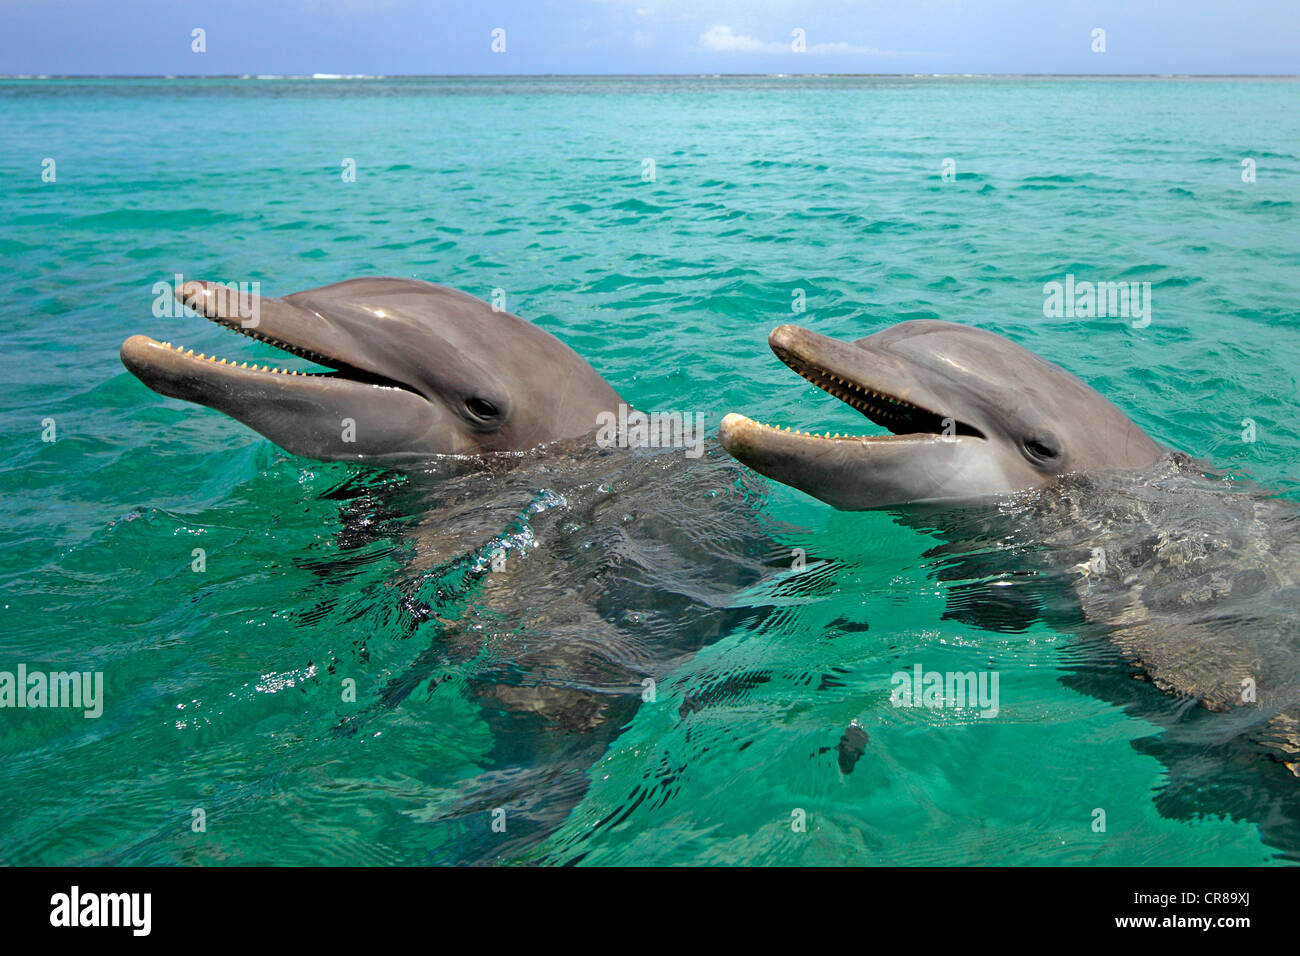 Dos delfines nariz de botella (Tursiops truncatus), adultos, natación, Roatán, Honduras, El Caribe, América Central, América Latina Foto de stock